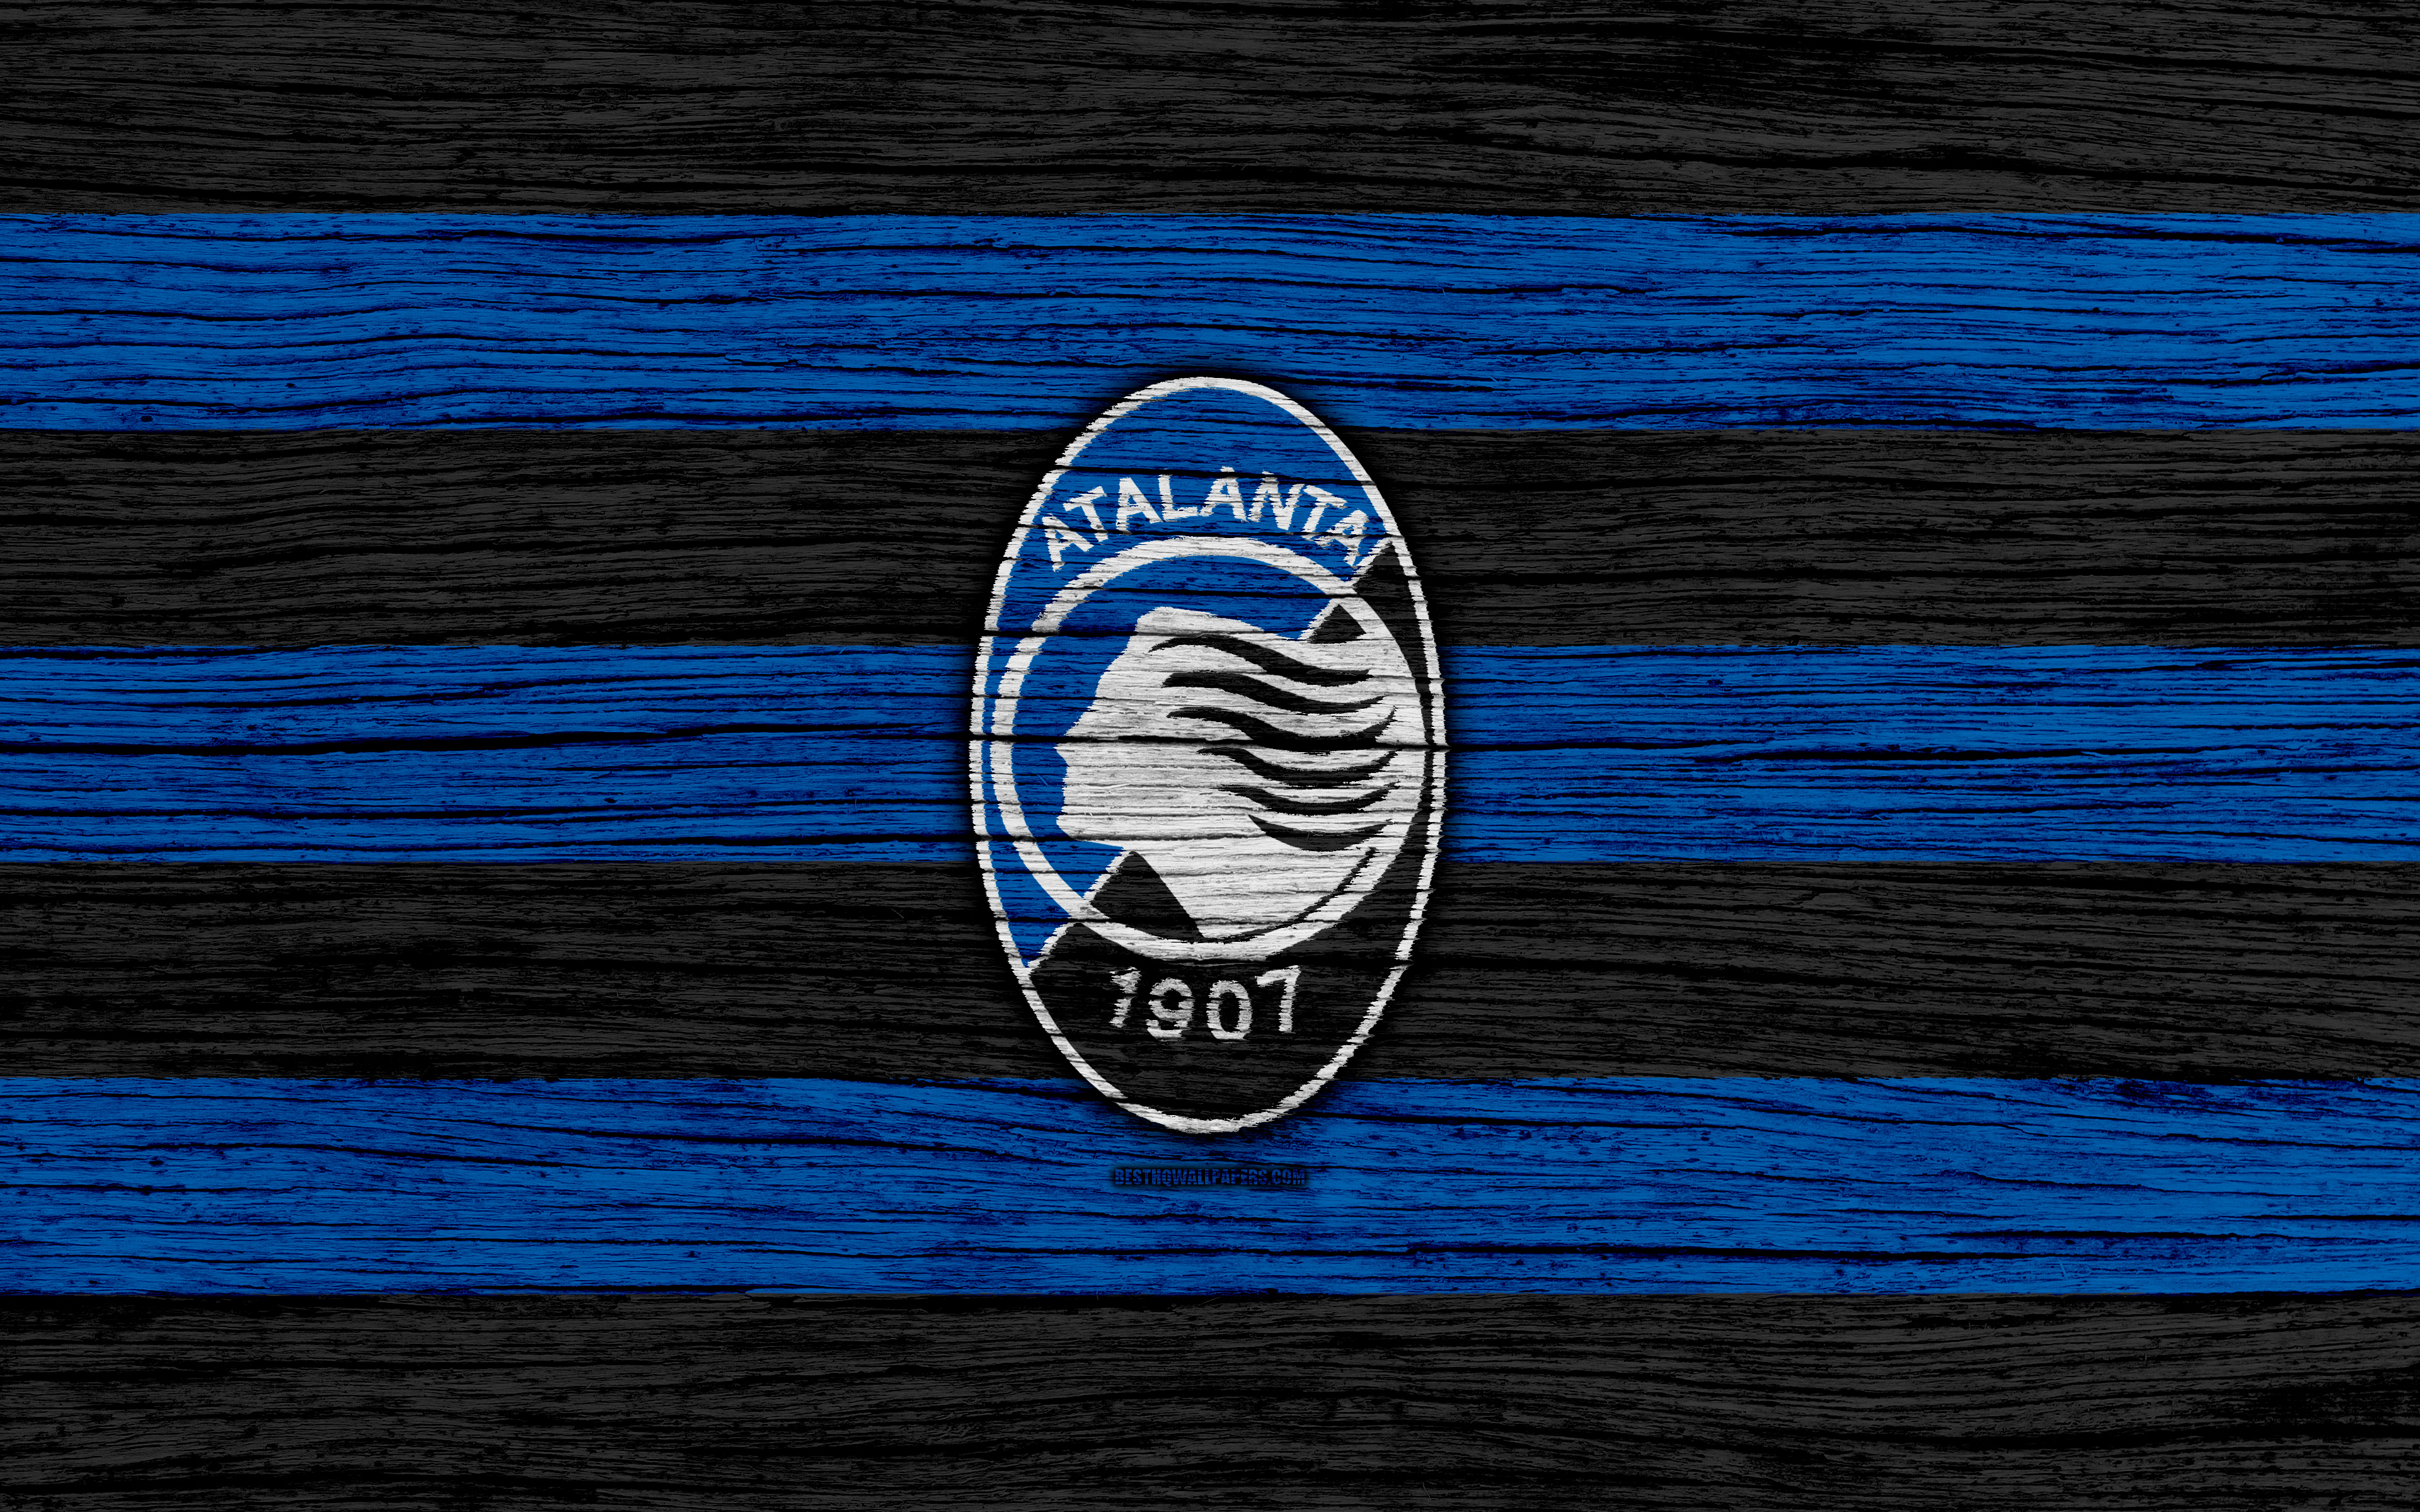 Download wallpapers Atalanta 4k Serie A logo Italy wooden